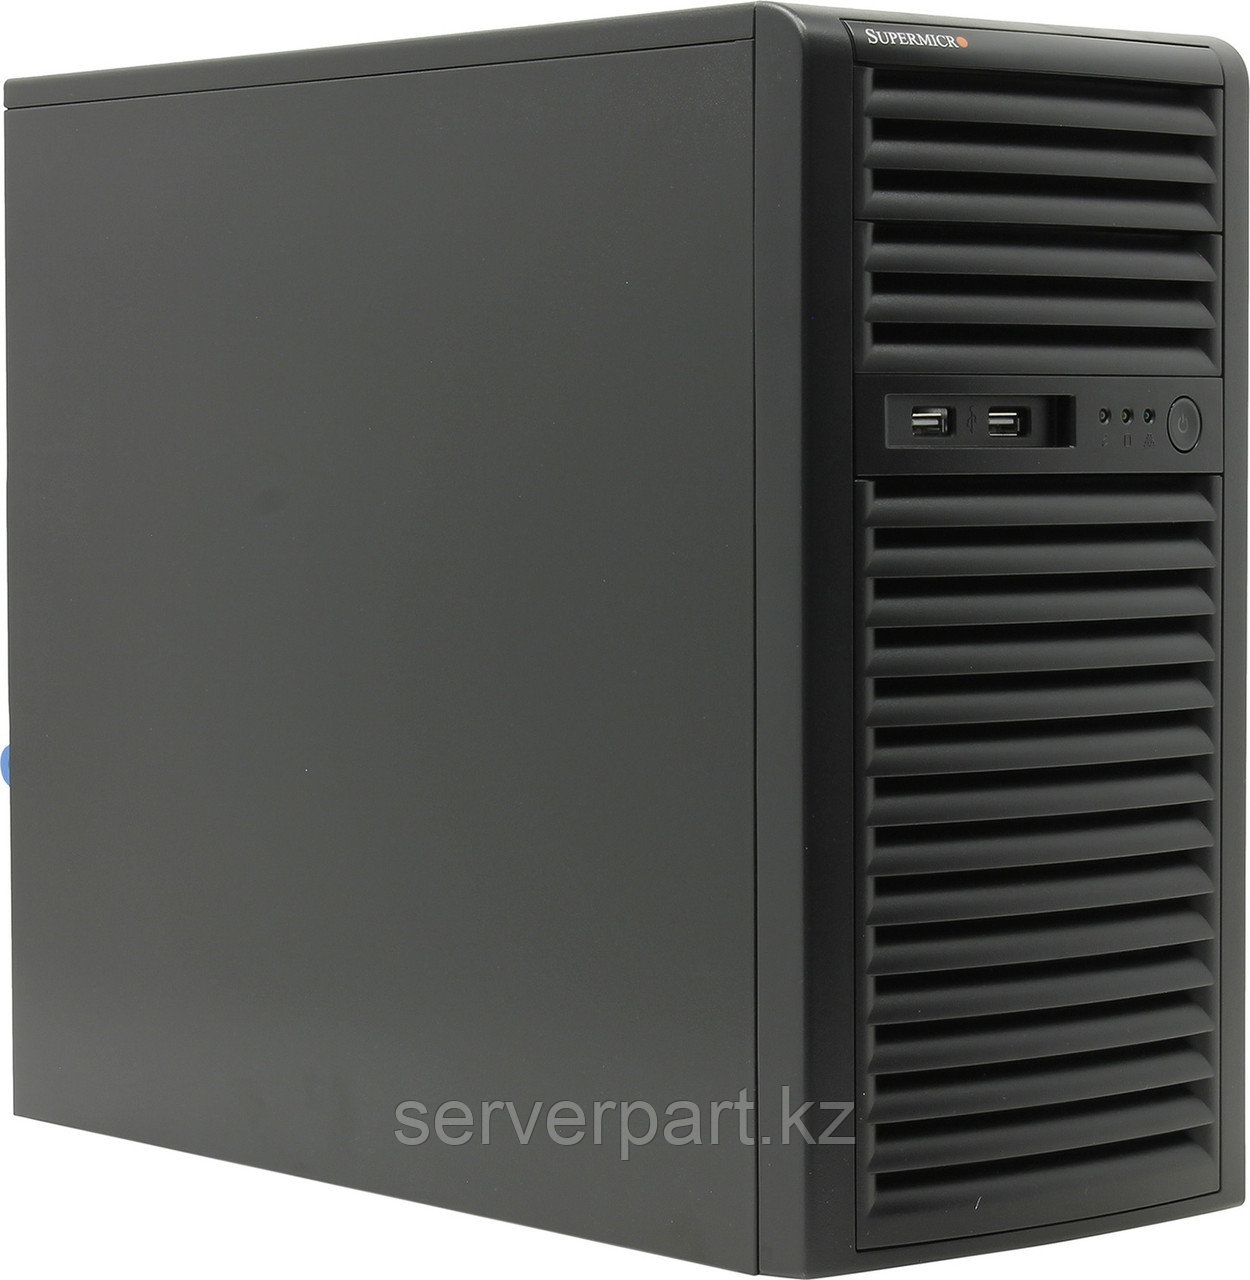 Сервер Supermicro SYS-5039D Tower/4-core intel xeon E3-1220v6 3GHz/16GB UDIMM nECC/1x480GB SSD MU Hyb, фото 1